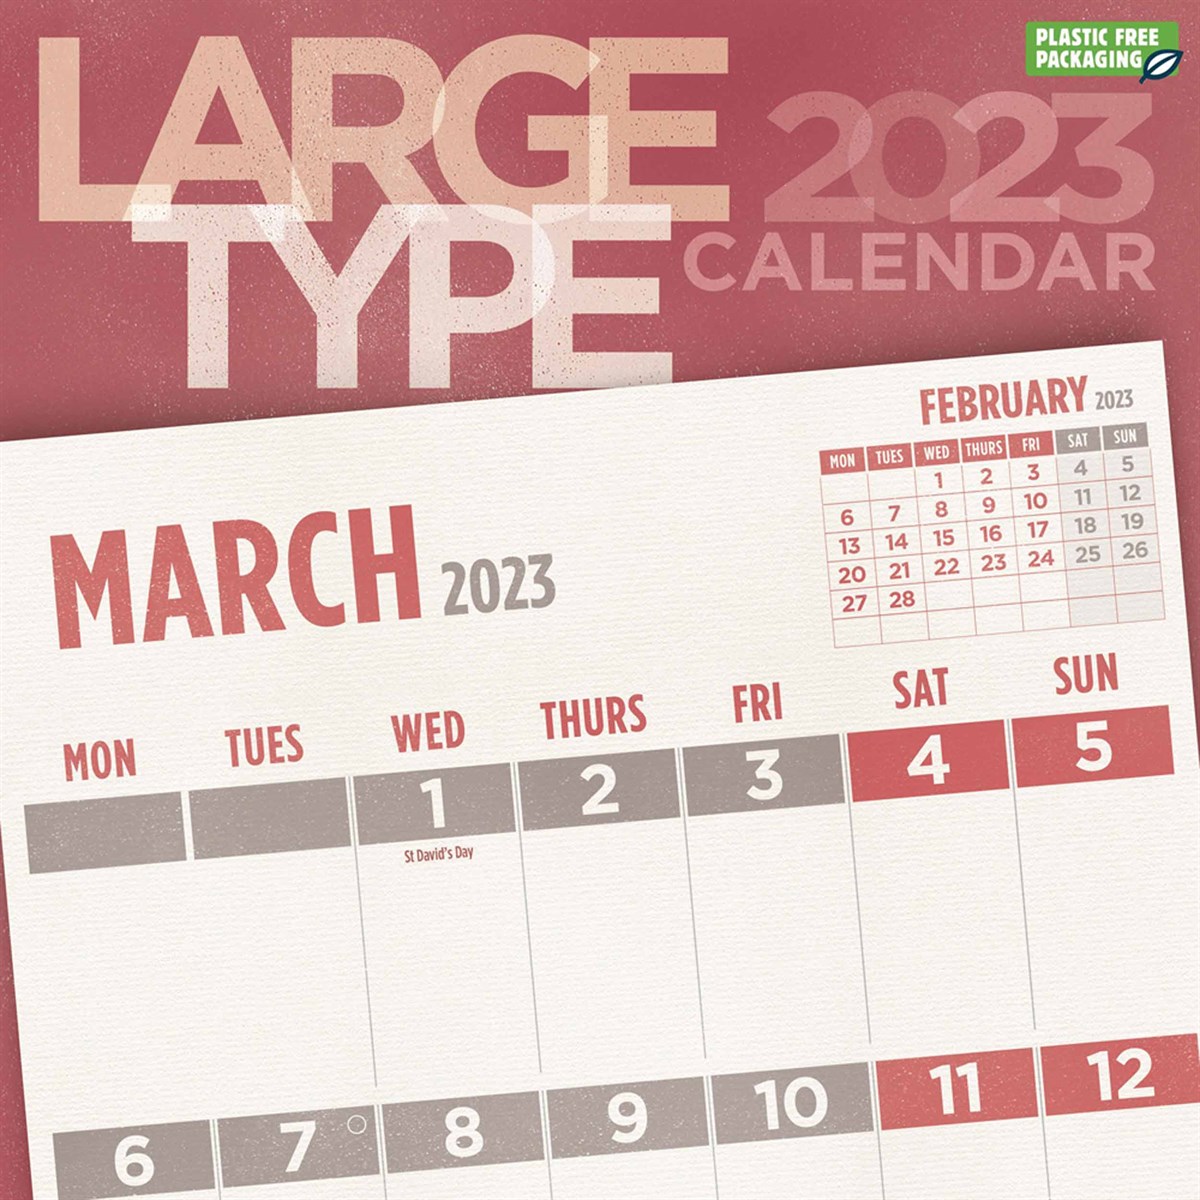 Large Type 2023 Calendars